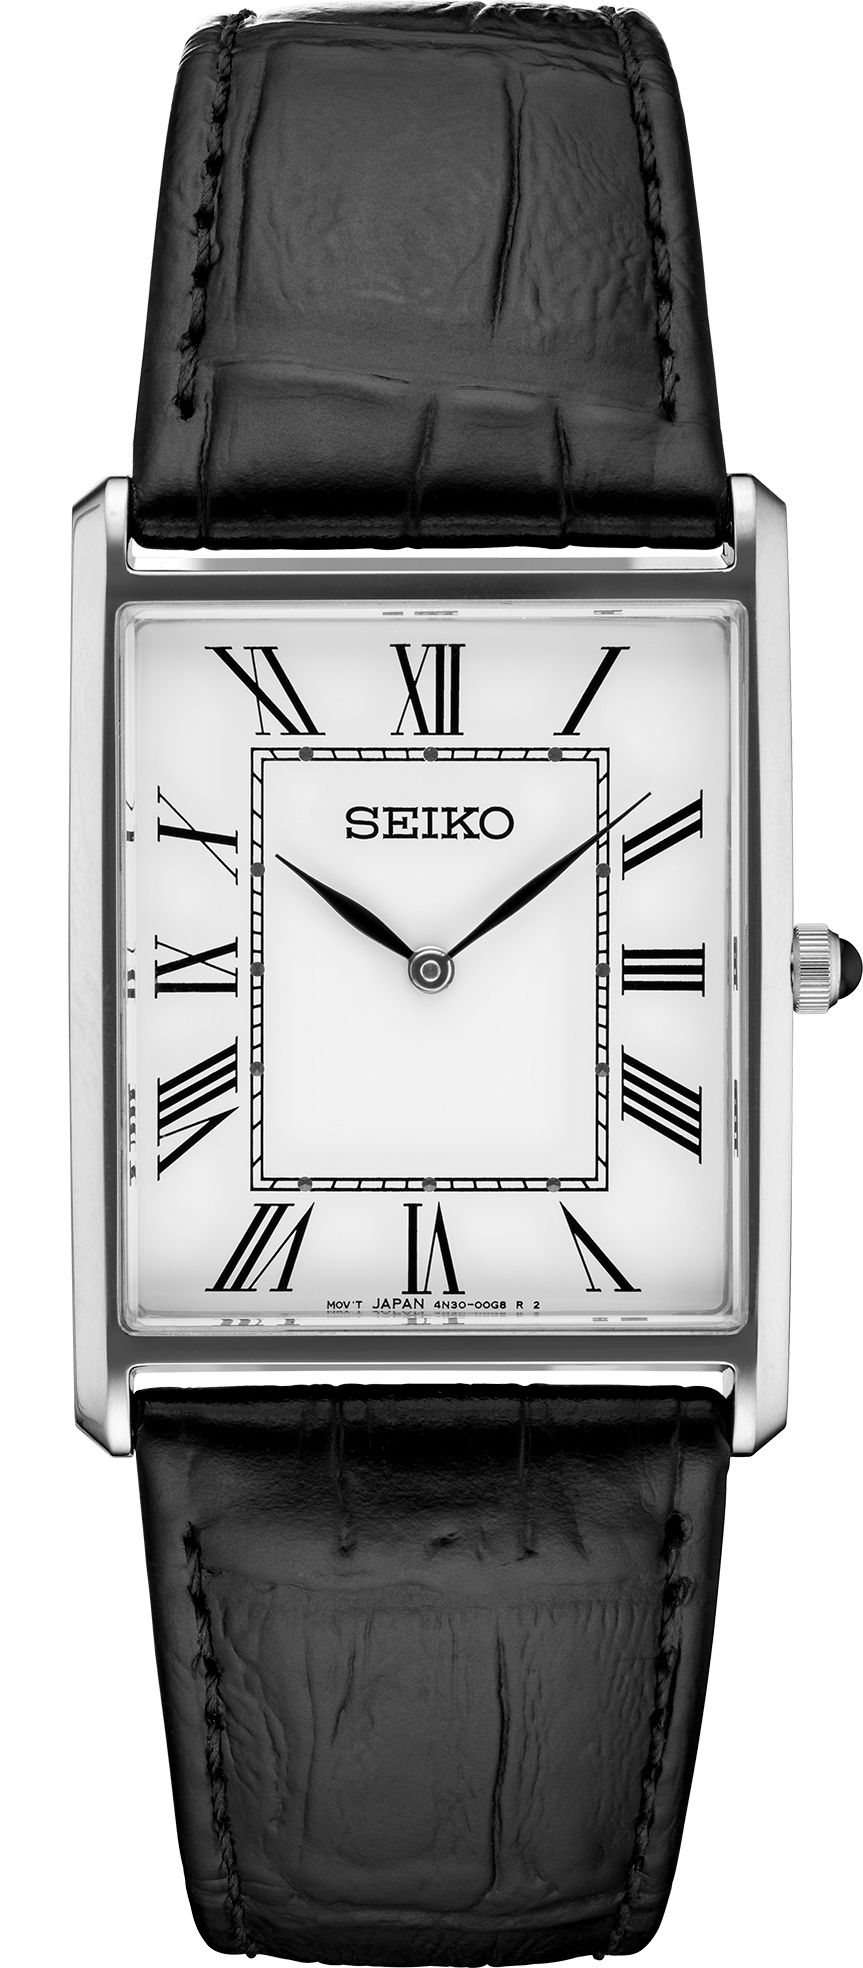 Fingerhut - Seiko Men's White Dial Roman Numerals Black Leather Strap Watch